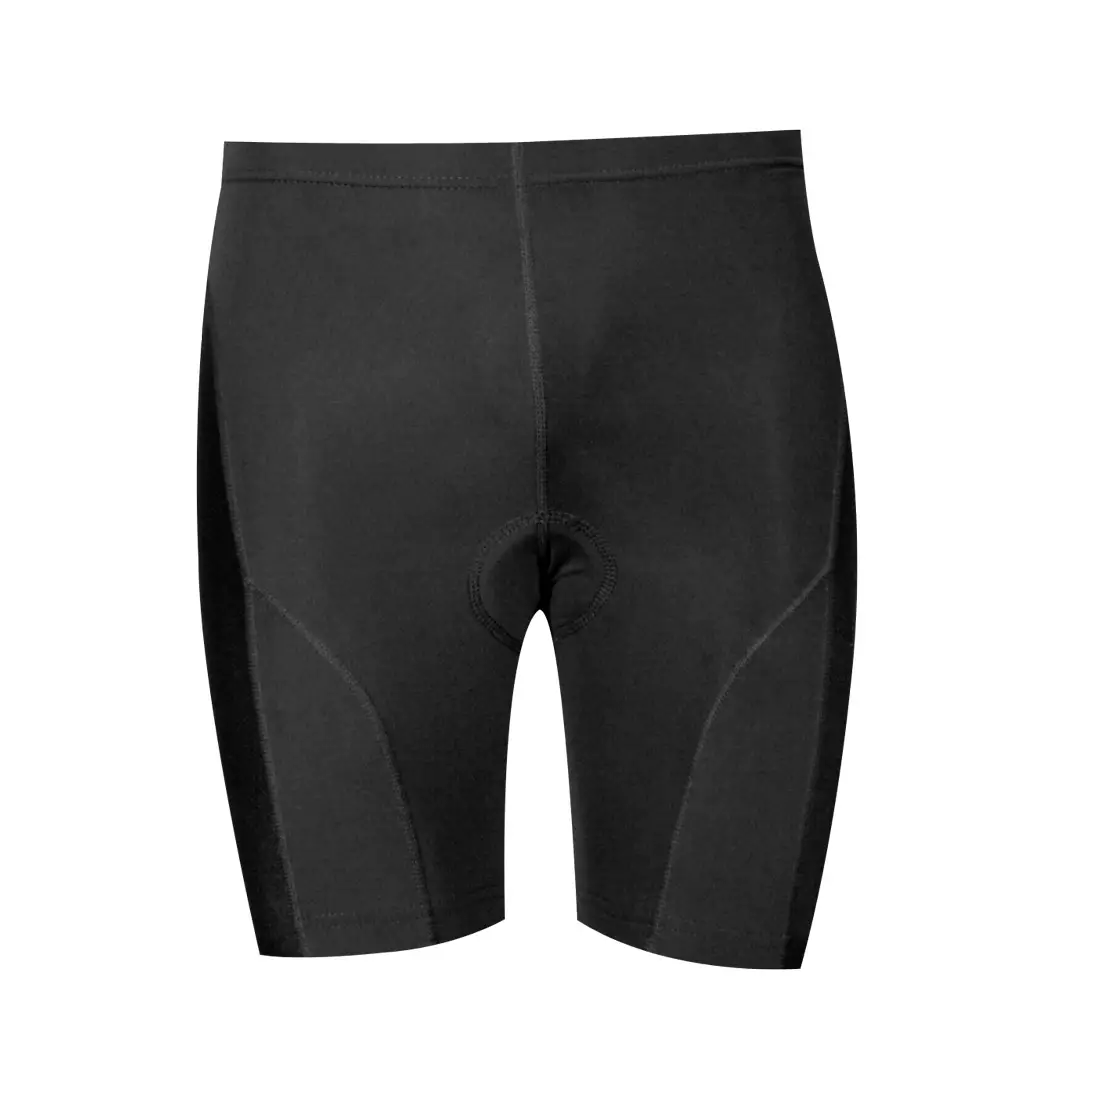 NEWLINE BIKE SHORTS - pantaloni scurți de ciclism pentru femei, insert Comfort Zone 20755-060